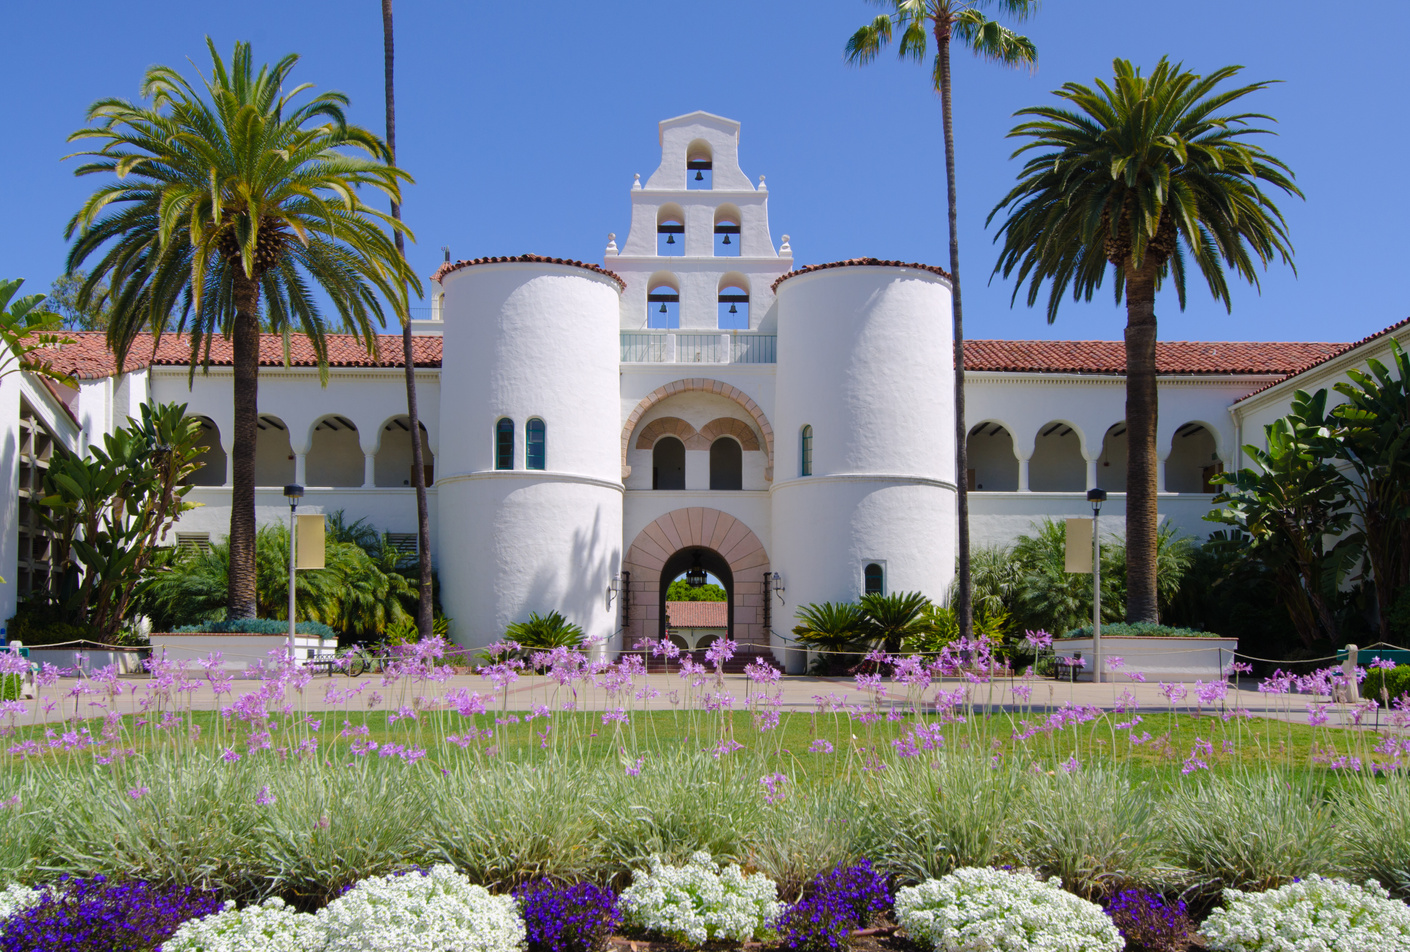 Hepner Hall at San Diego State University